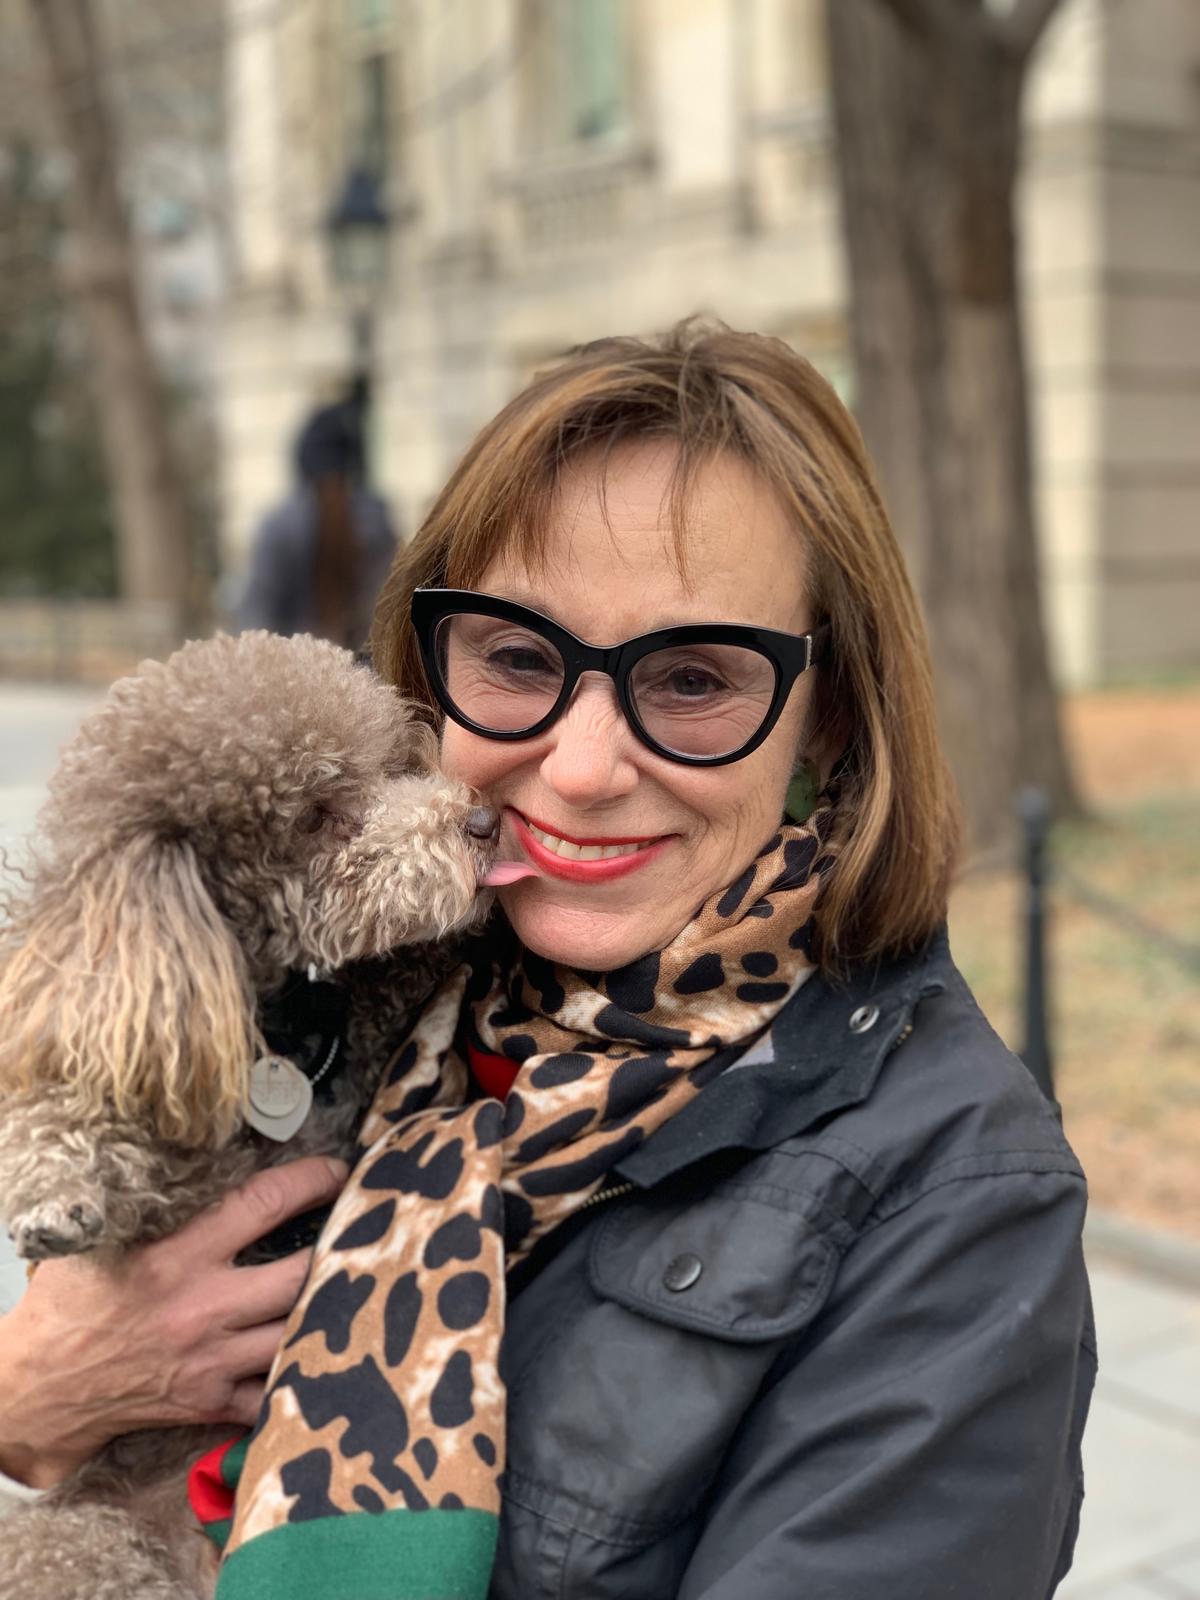 Lena Lencek in New York on Feb 22, 2019. (Stuart Liess/The Epoch Times)